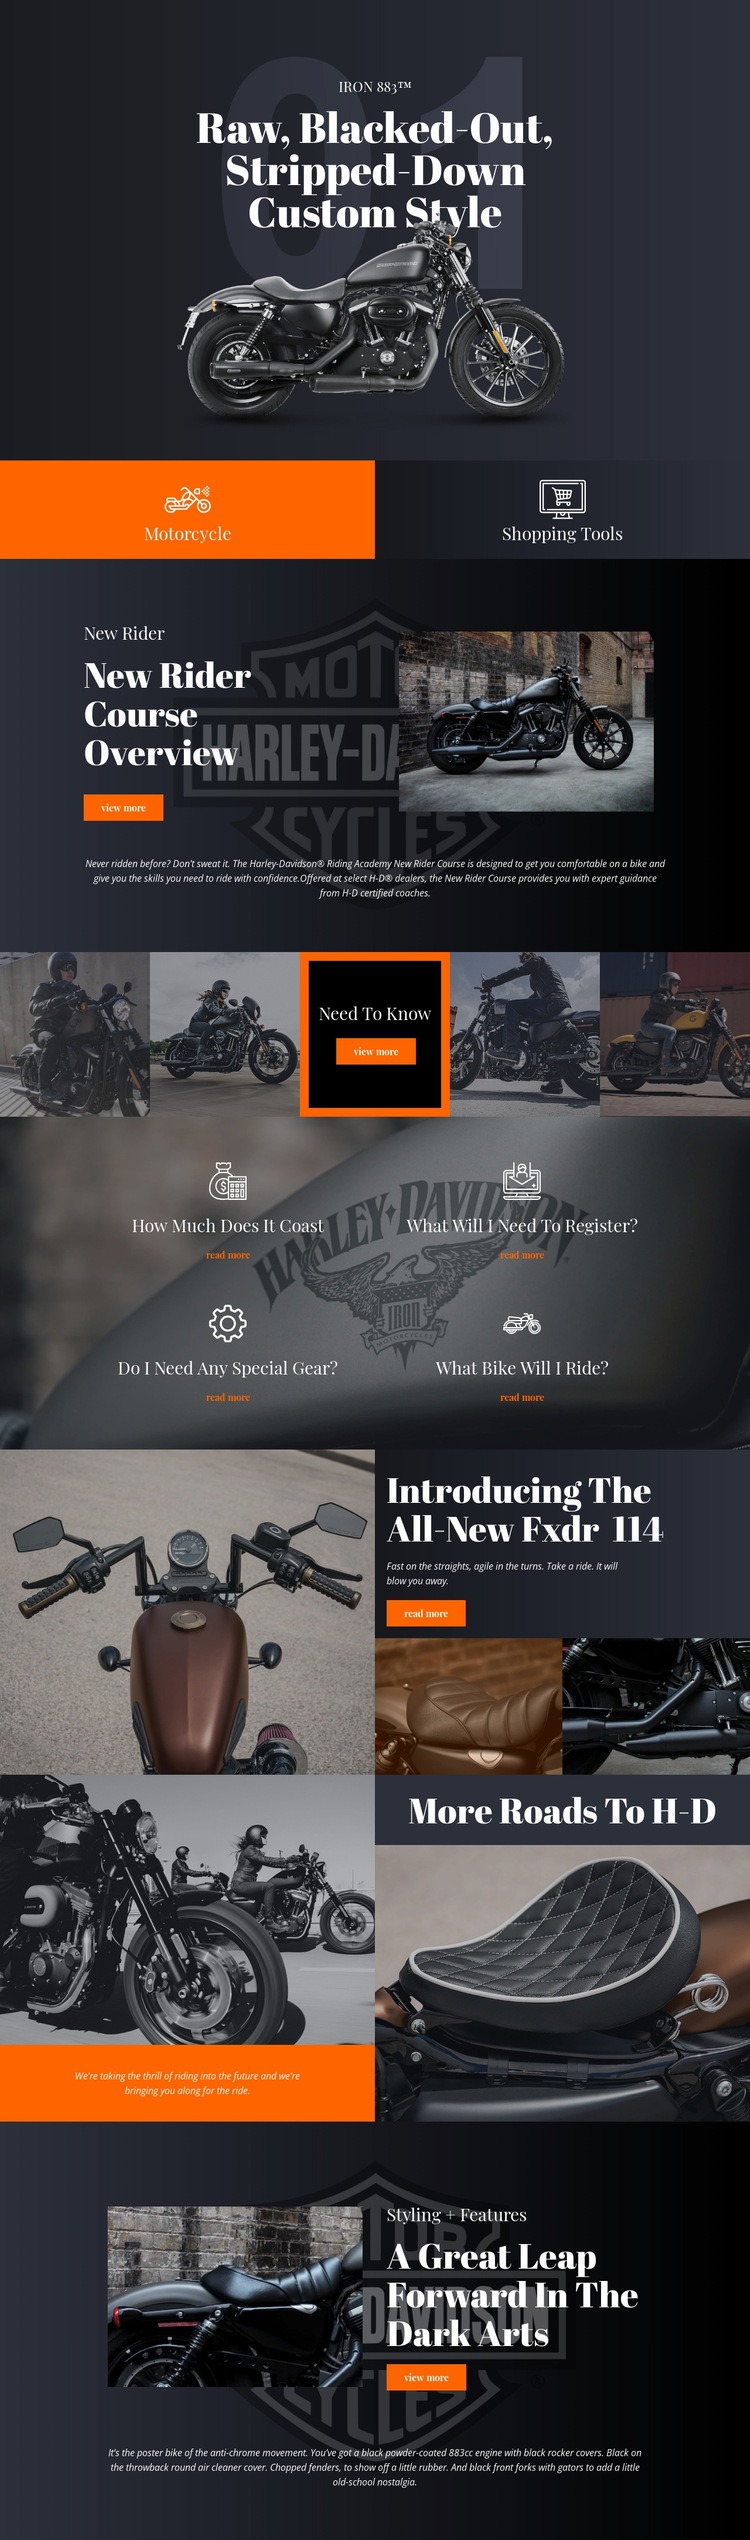 Harley Davidson Wysiwyg Editor Html 